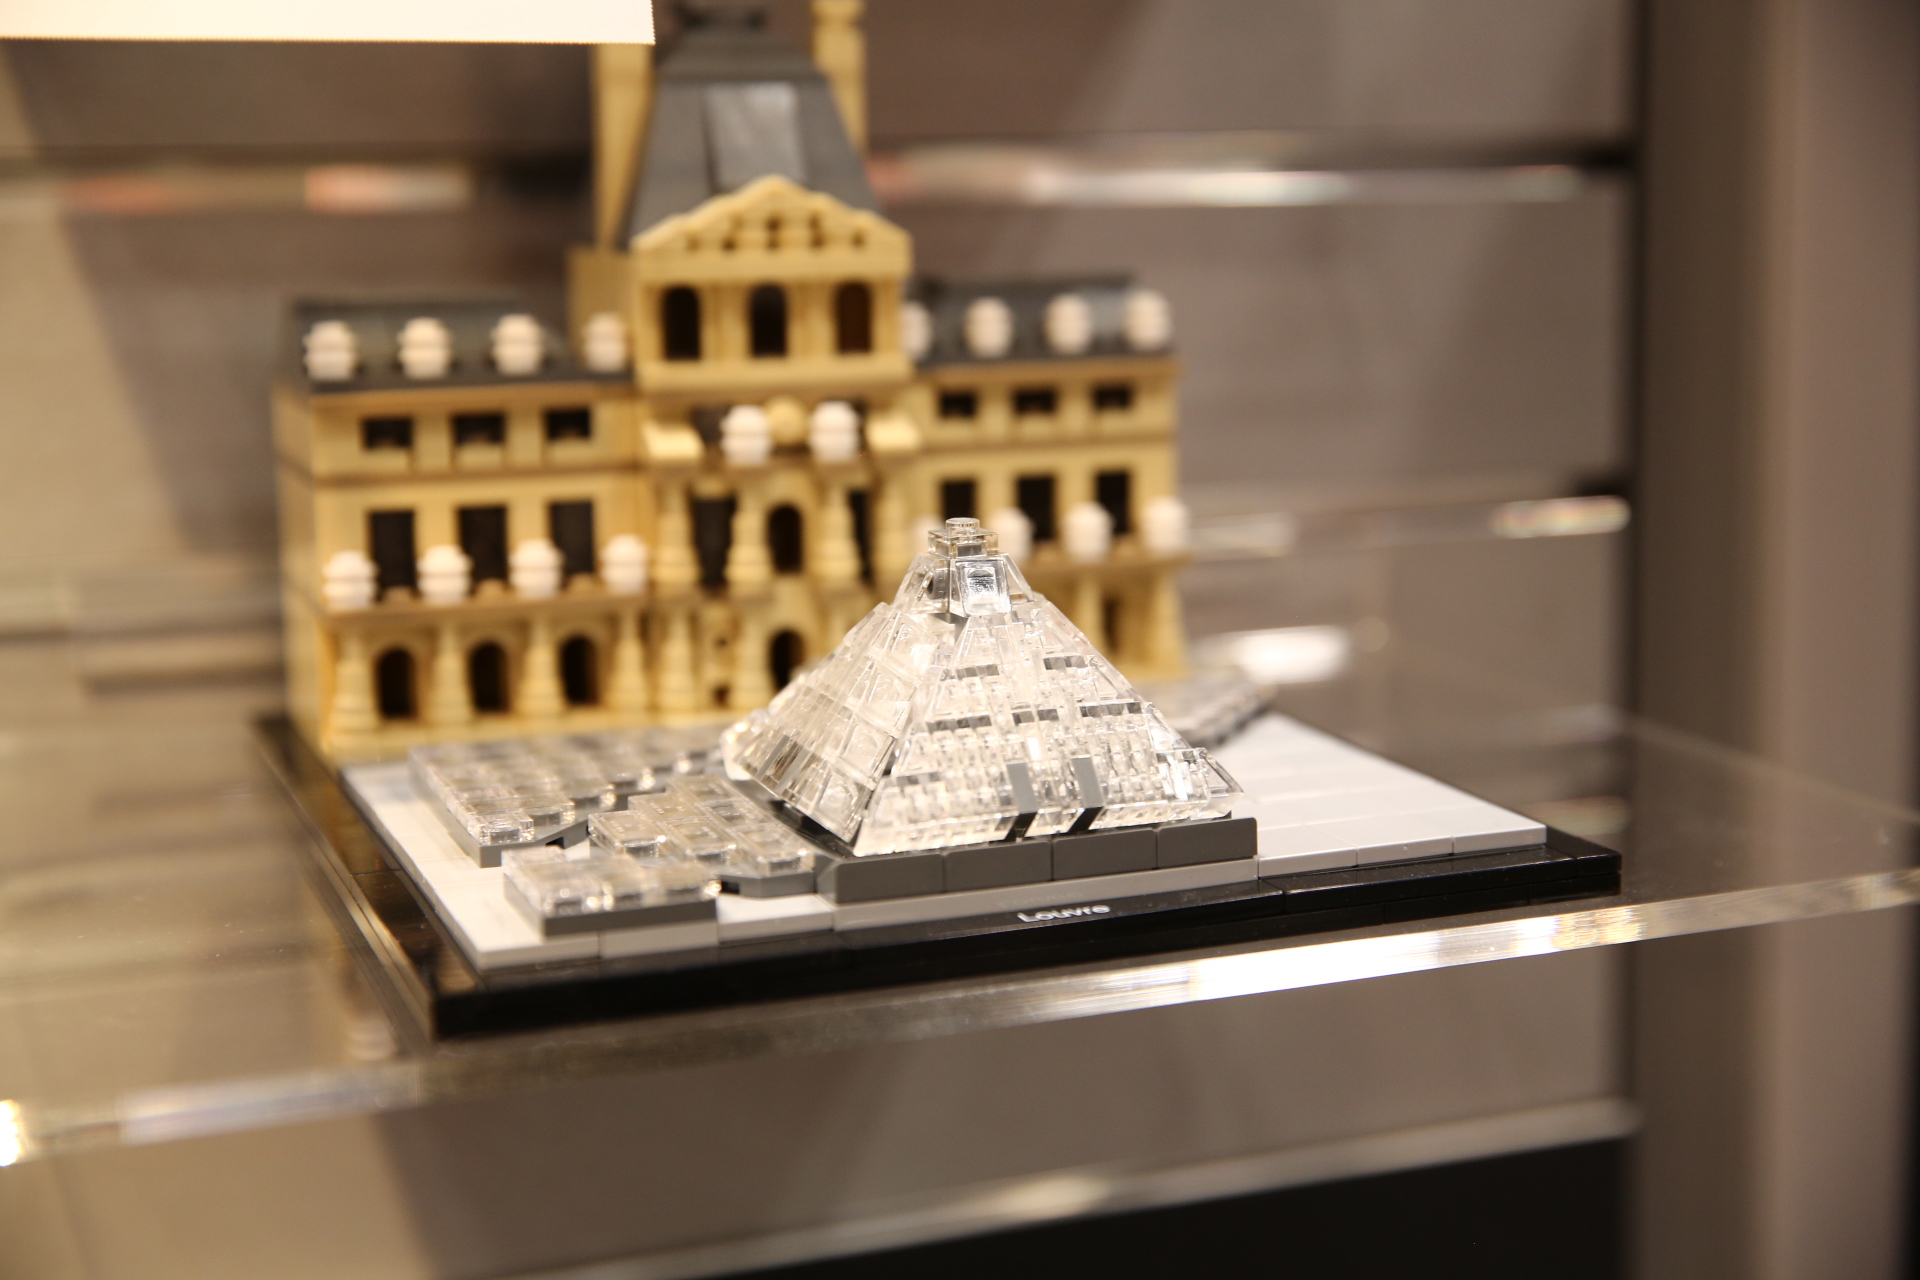 Toy Fair Report 2015: LEGO Architecture: 21024 The Louvre - FBTB